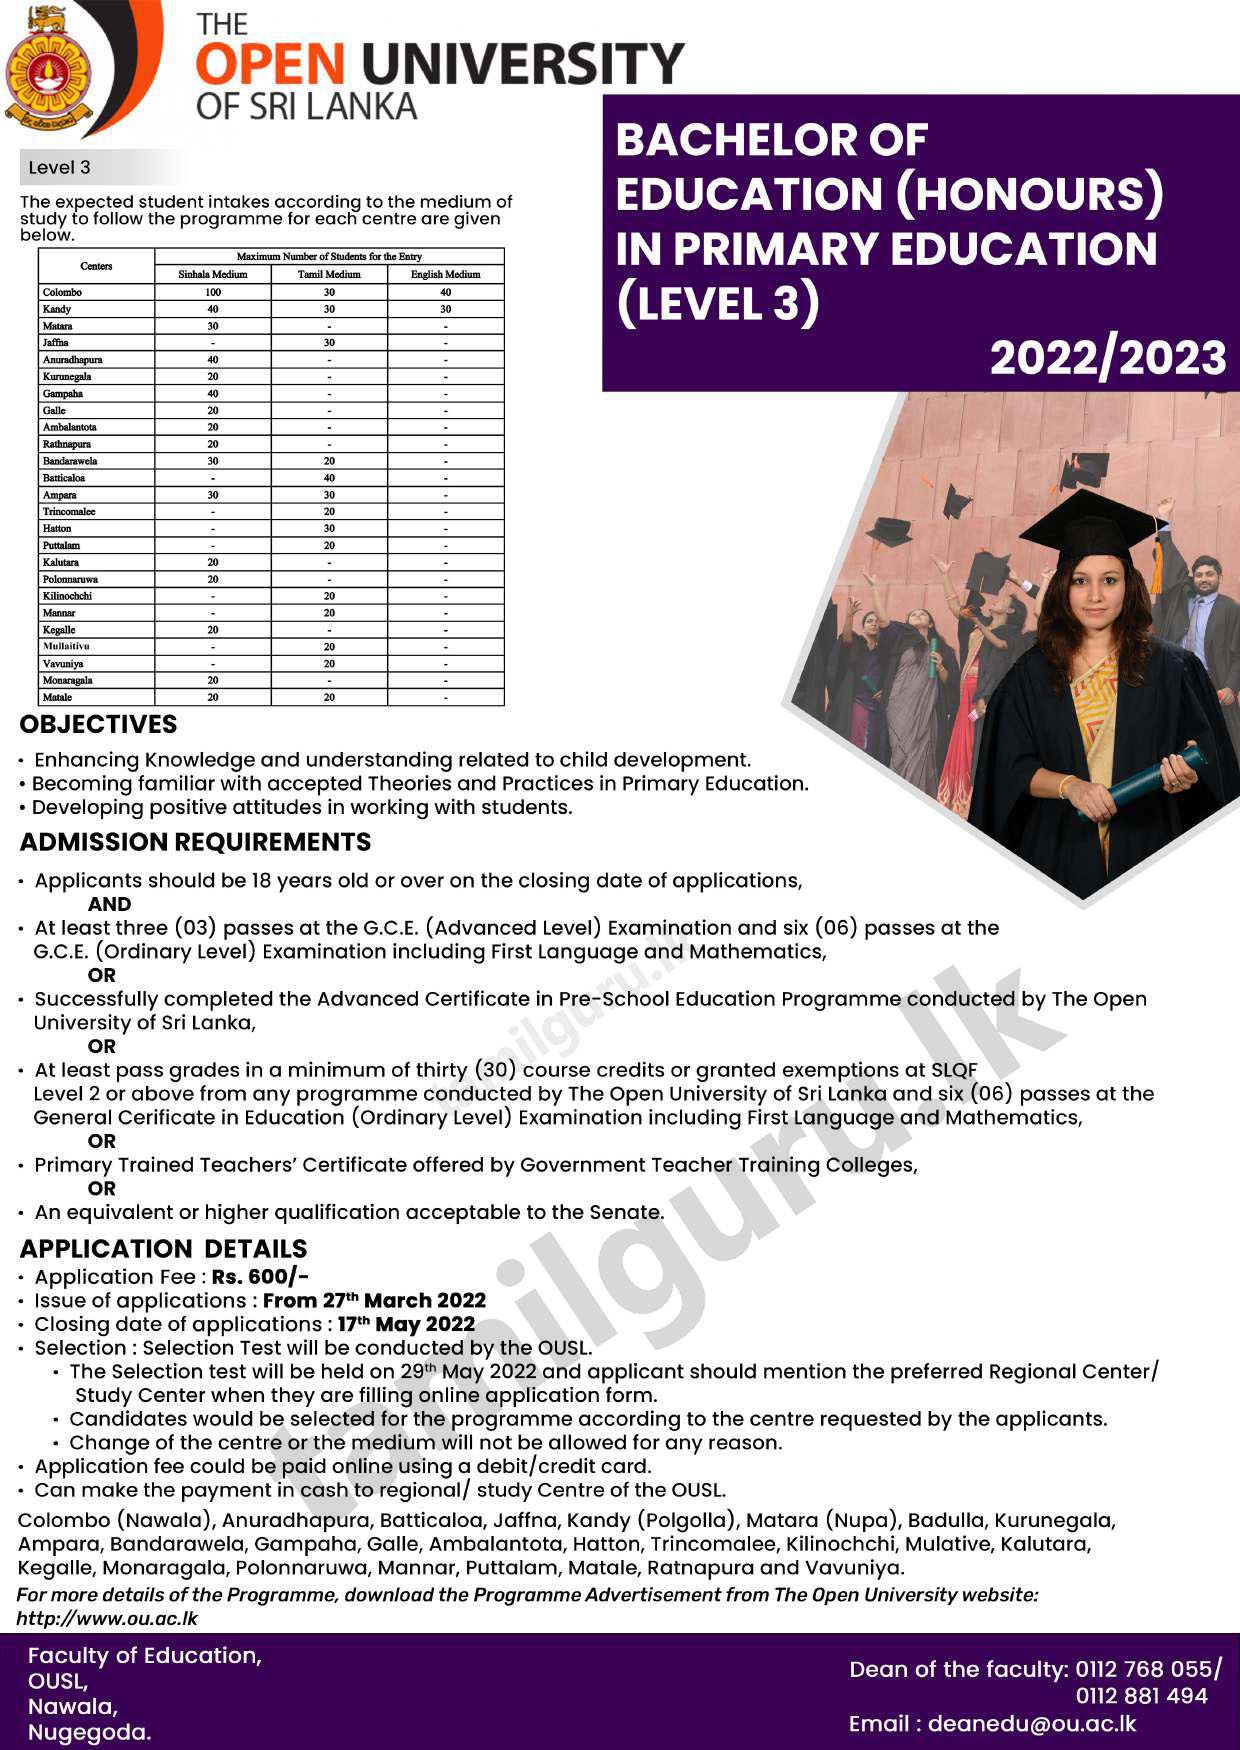 Bachelor of Education (Honours) in Primary Education Degree Programme 2022/2023 - The Open University of Sri Lanka (OUSL)